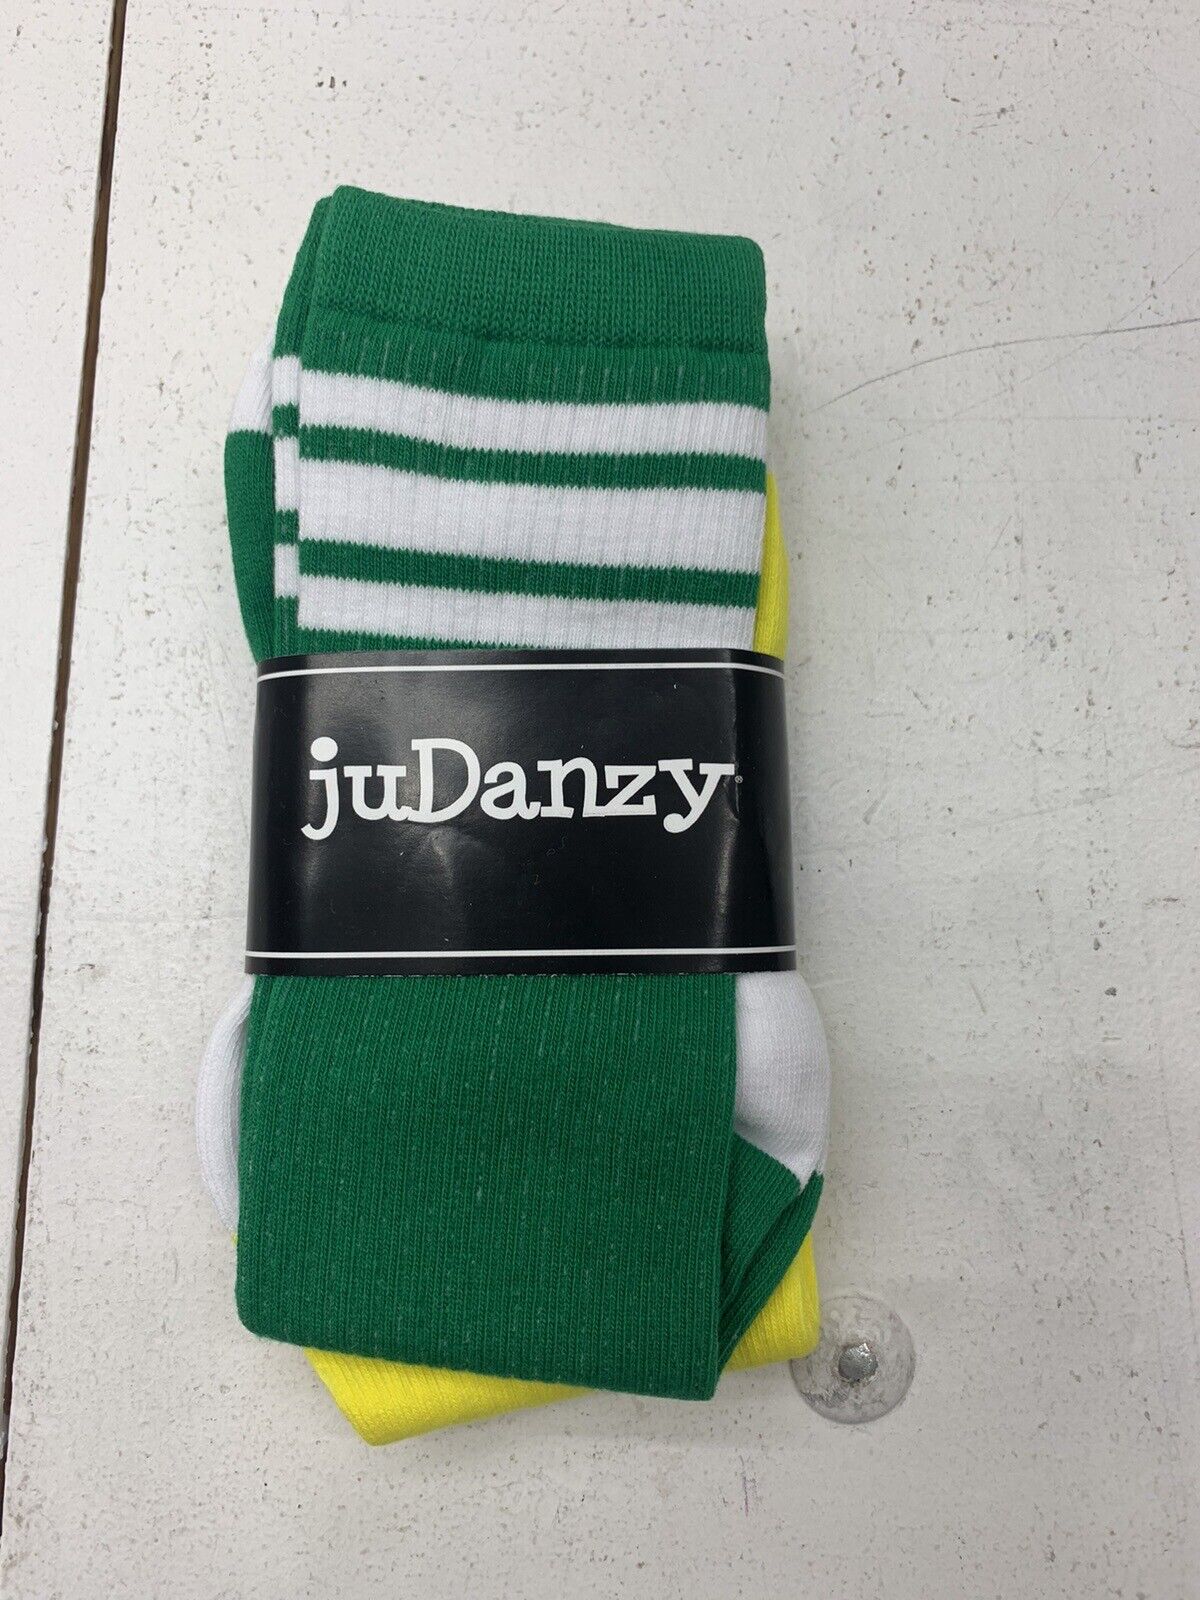 Judanzy Unisex 2 Pair Kneehigh Tube Socks One Size